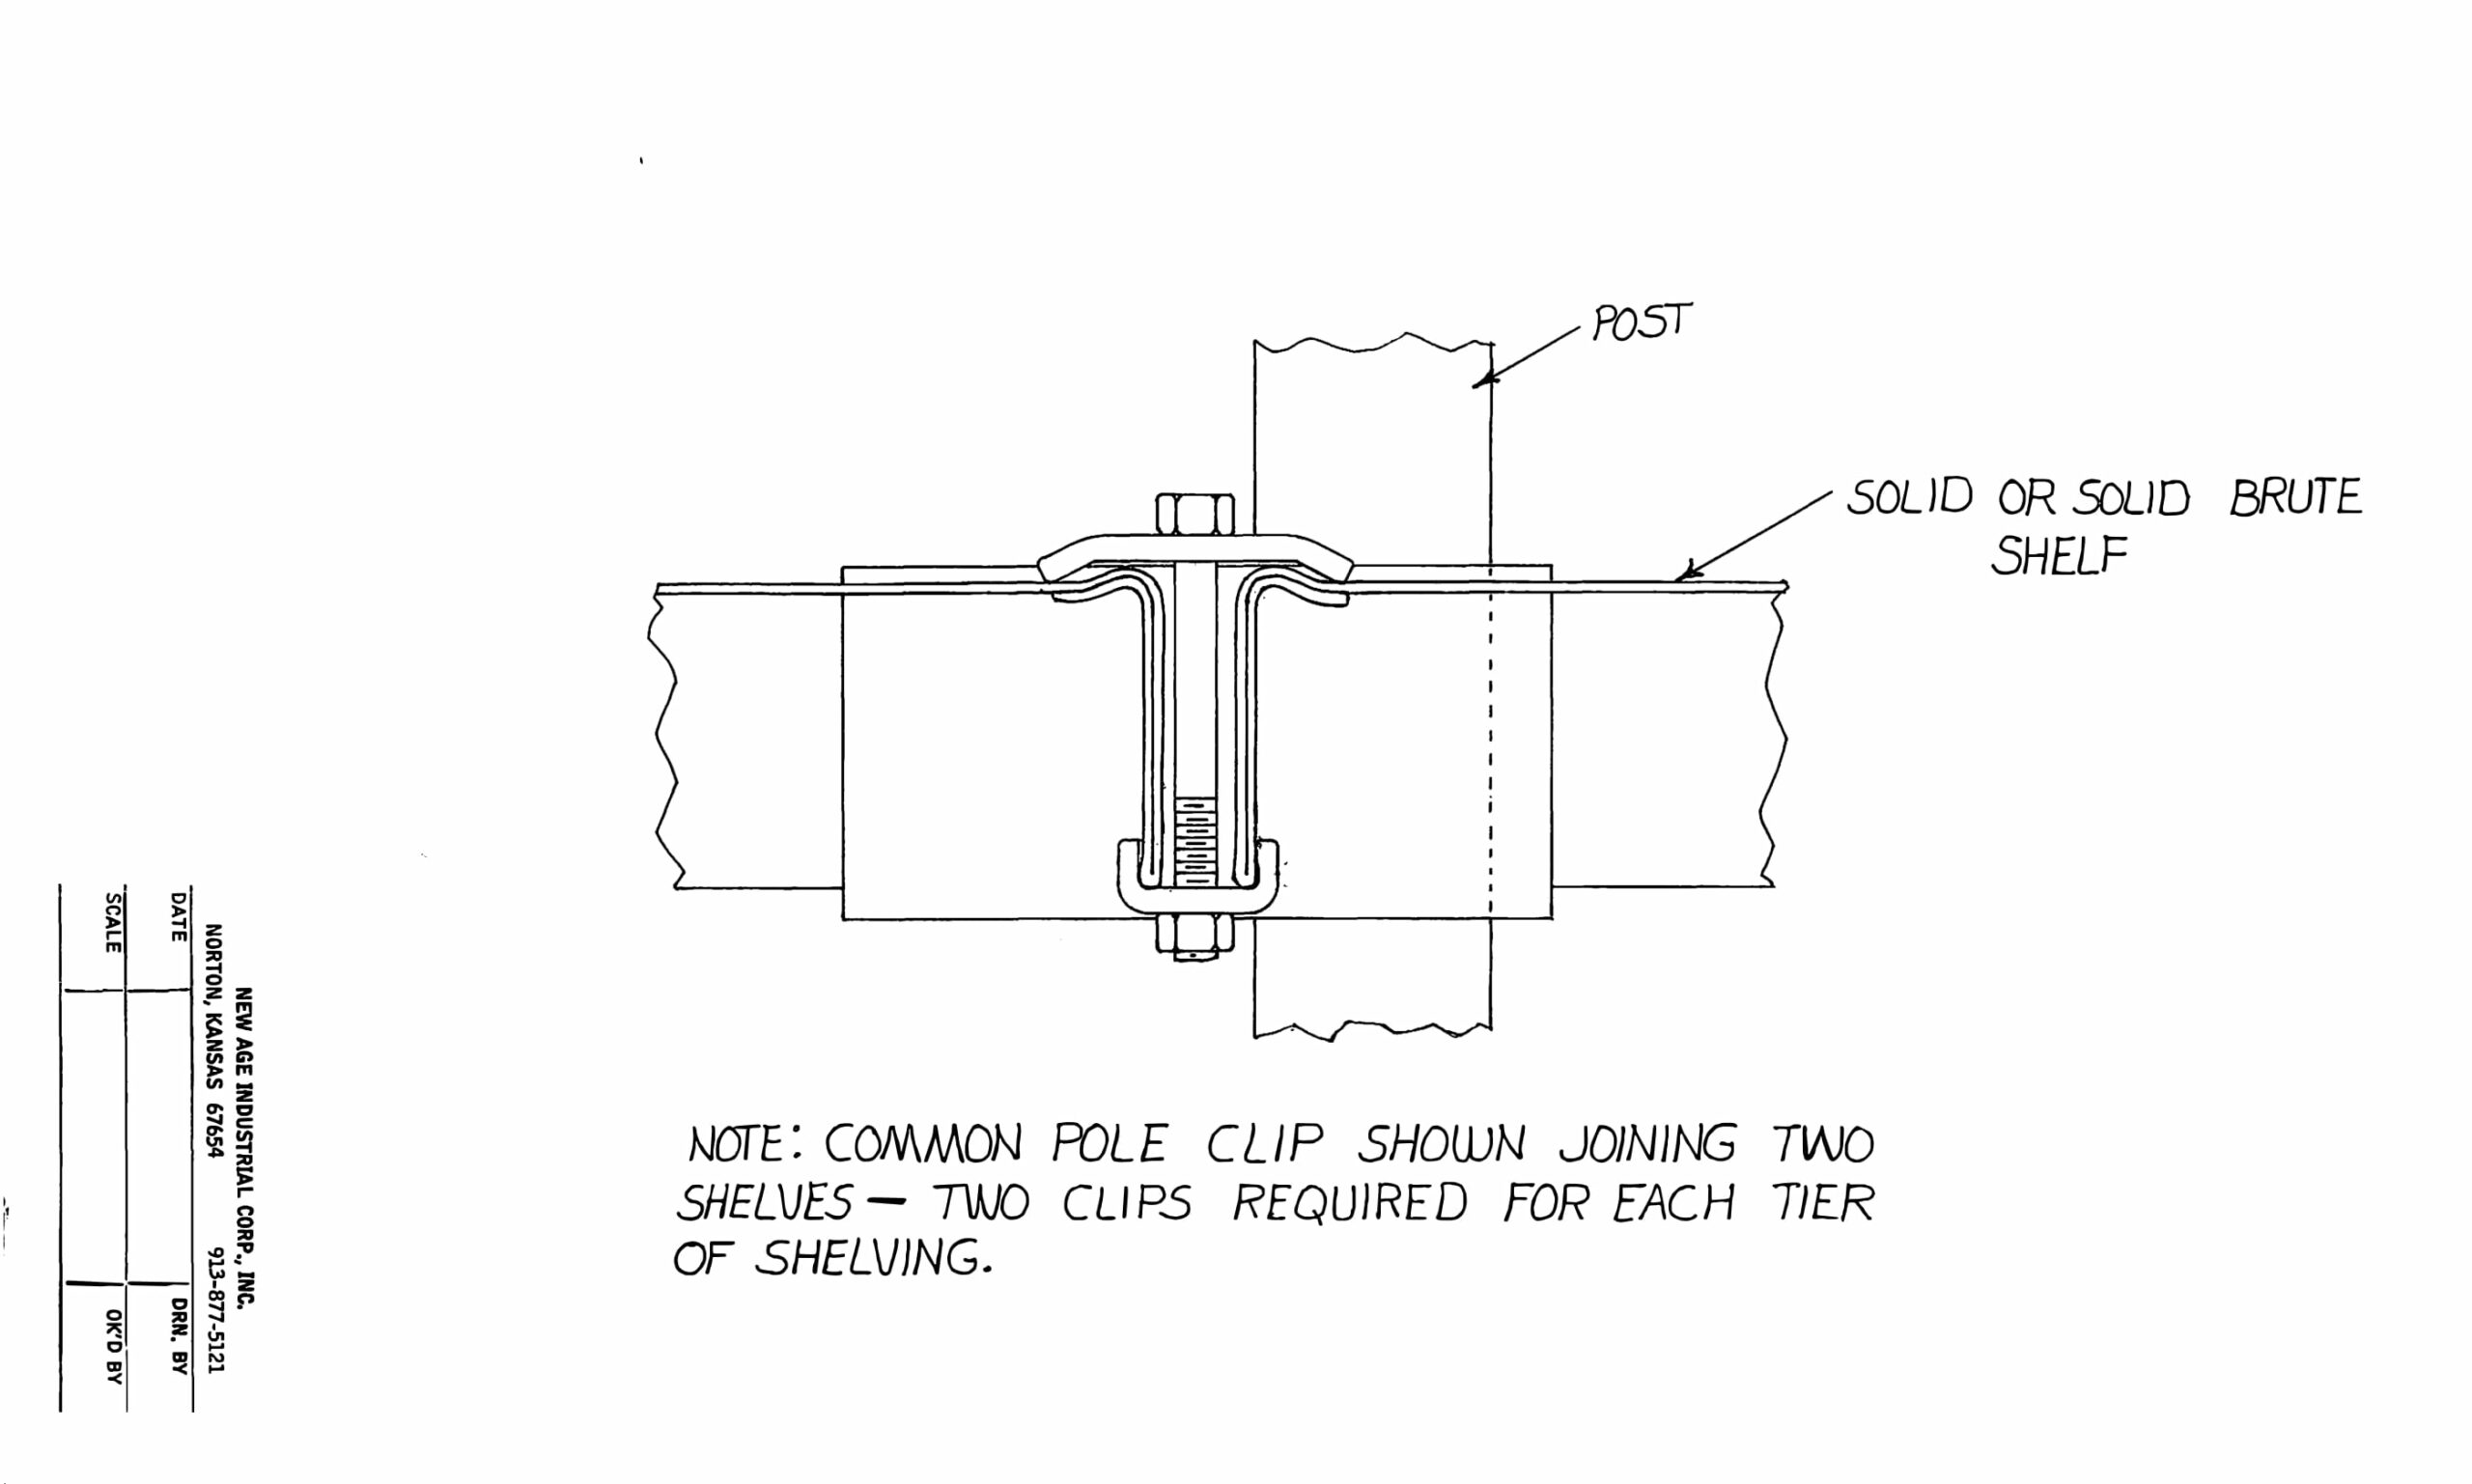 Adjustable Shelving – Common Pole Clip